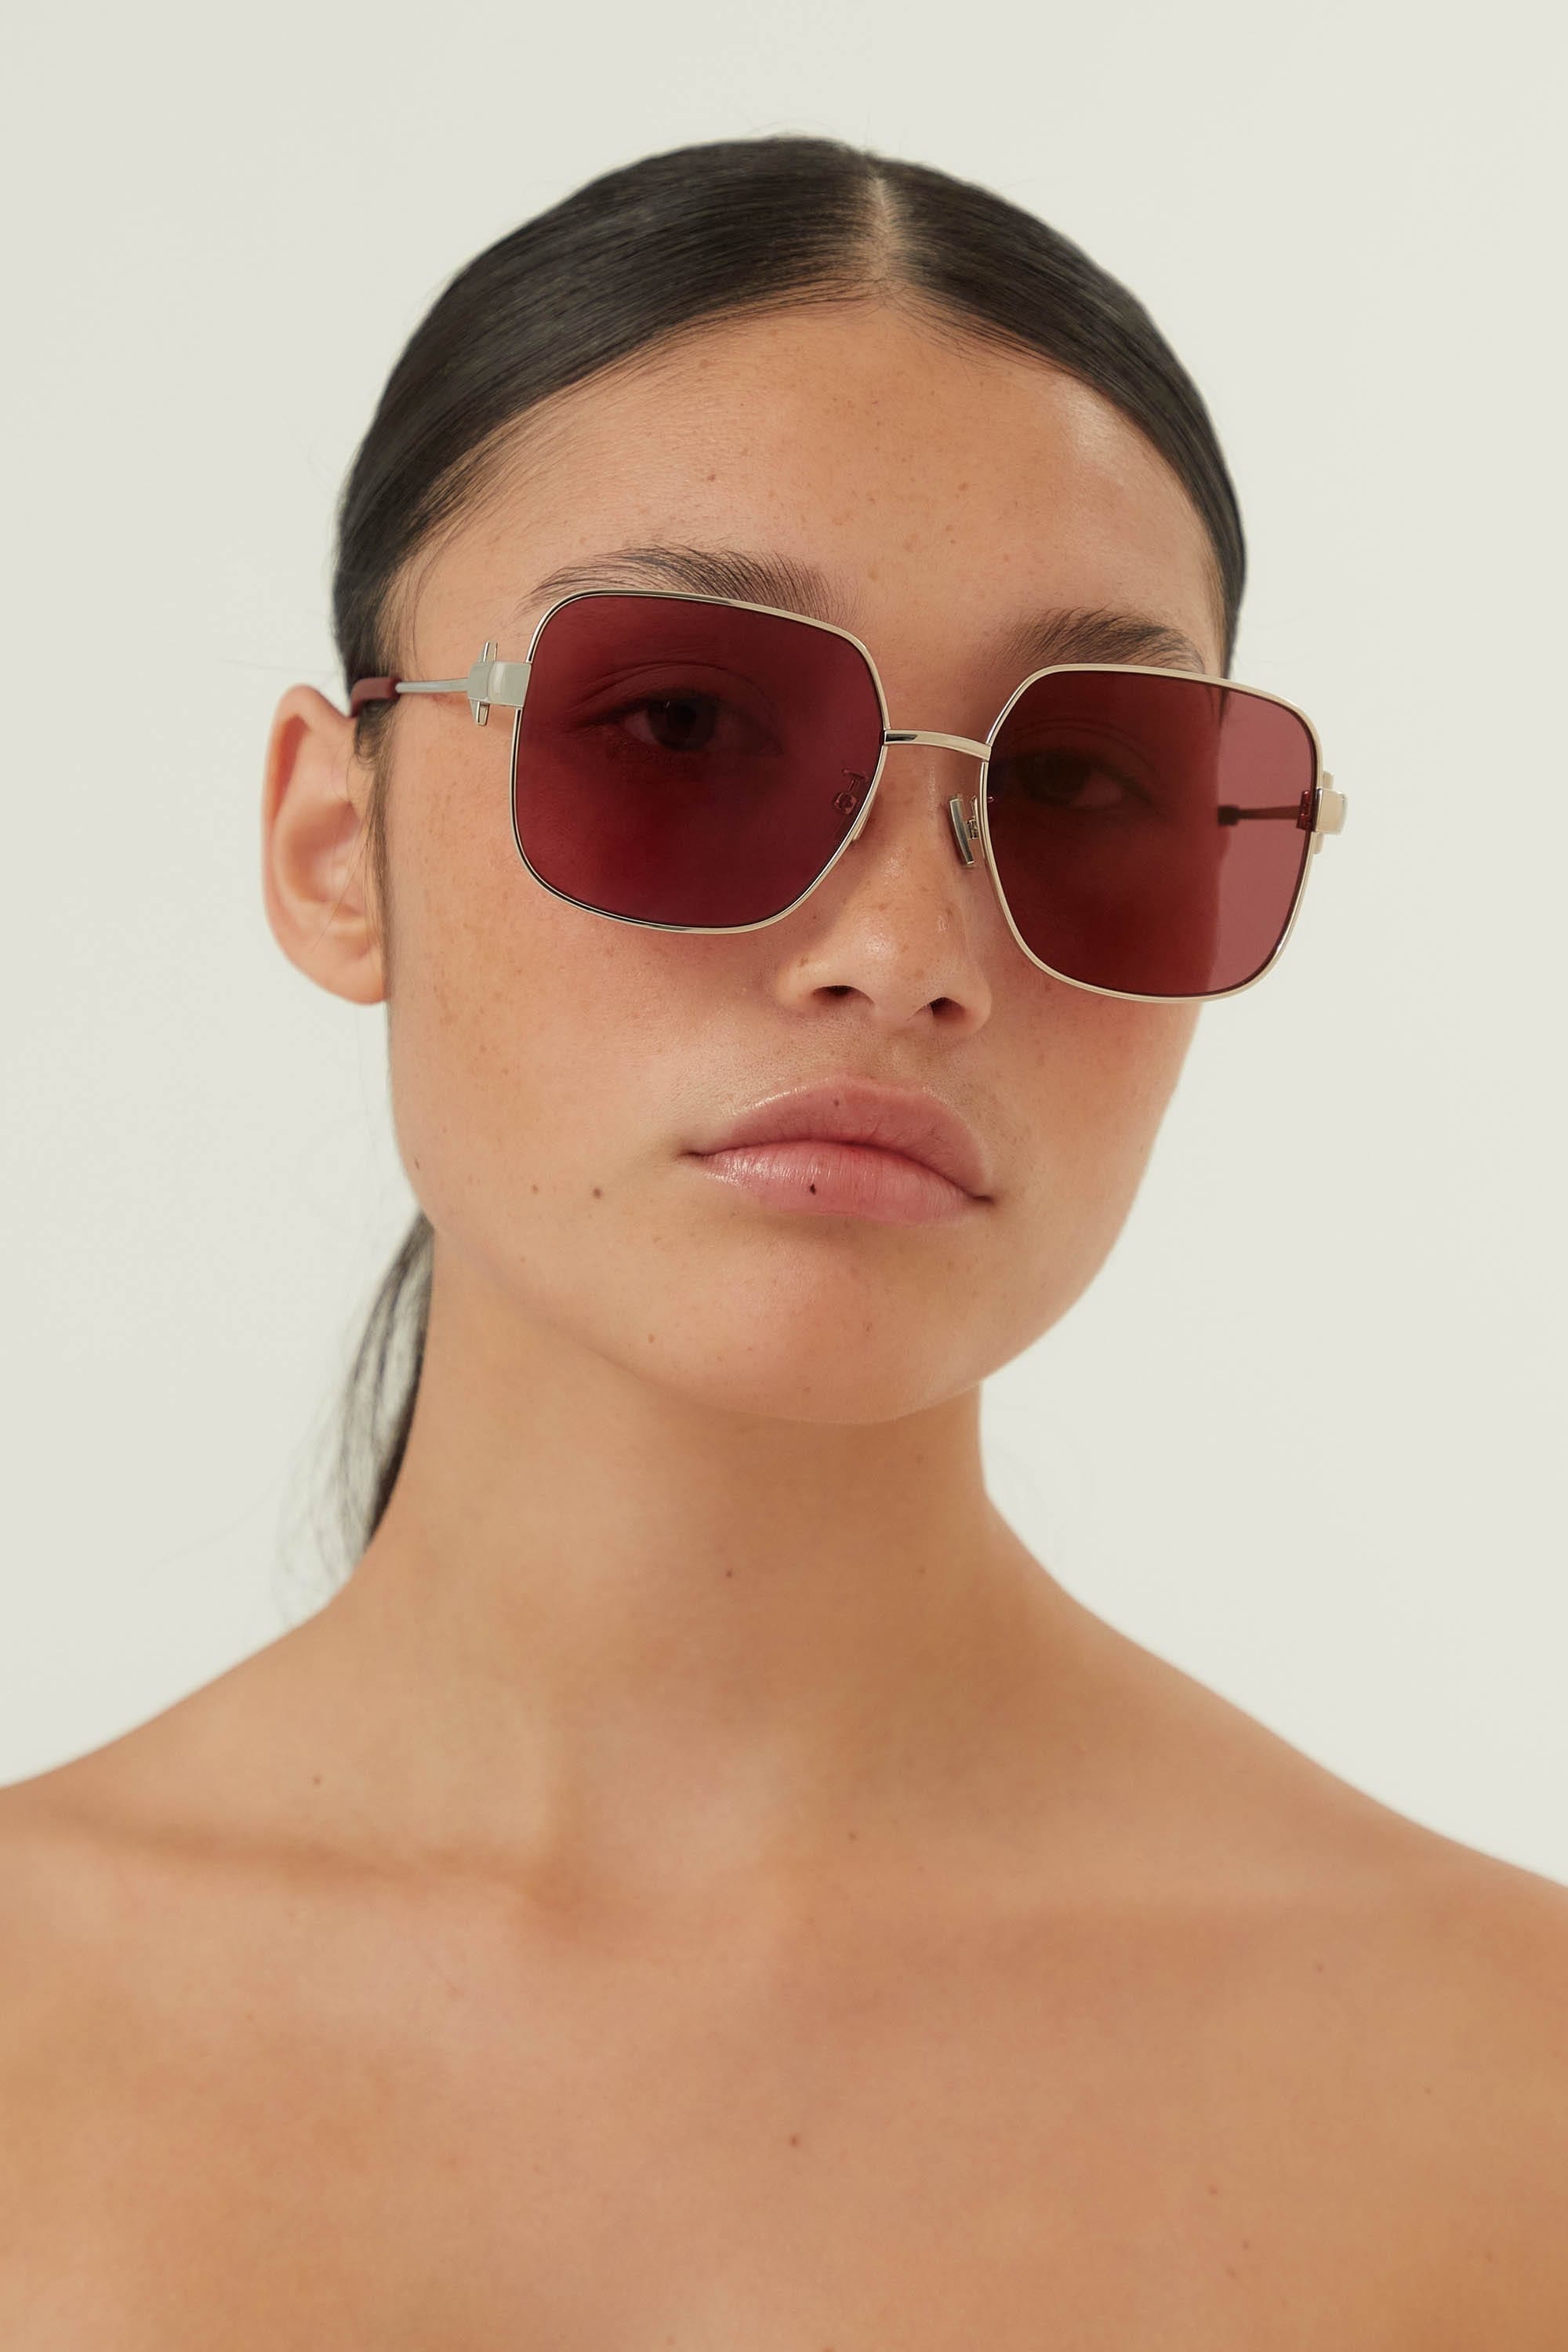 Bottega Veneta squared full metal silver and pink sunglasses - Eyewear Club